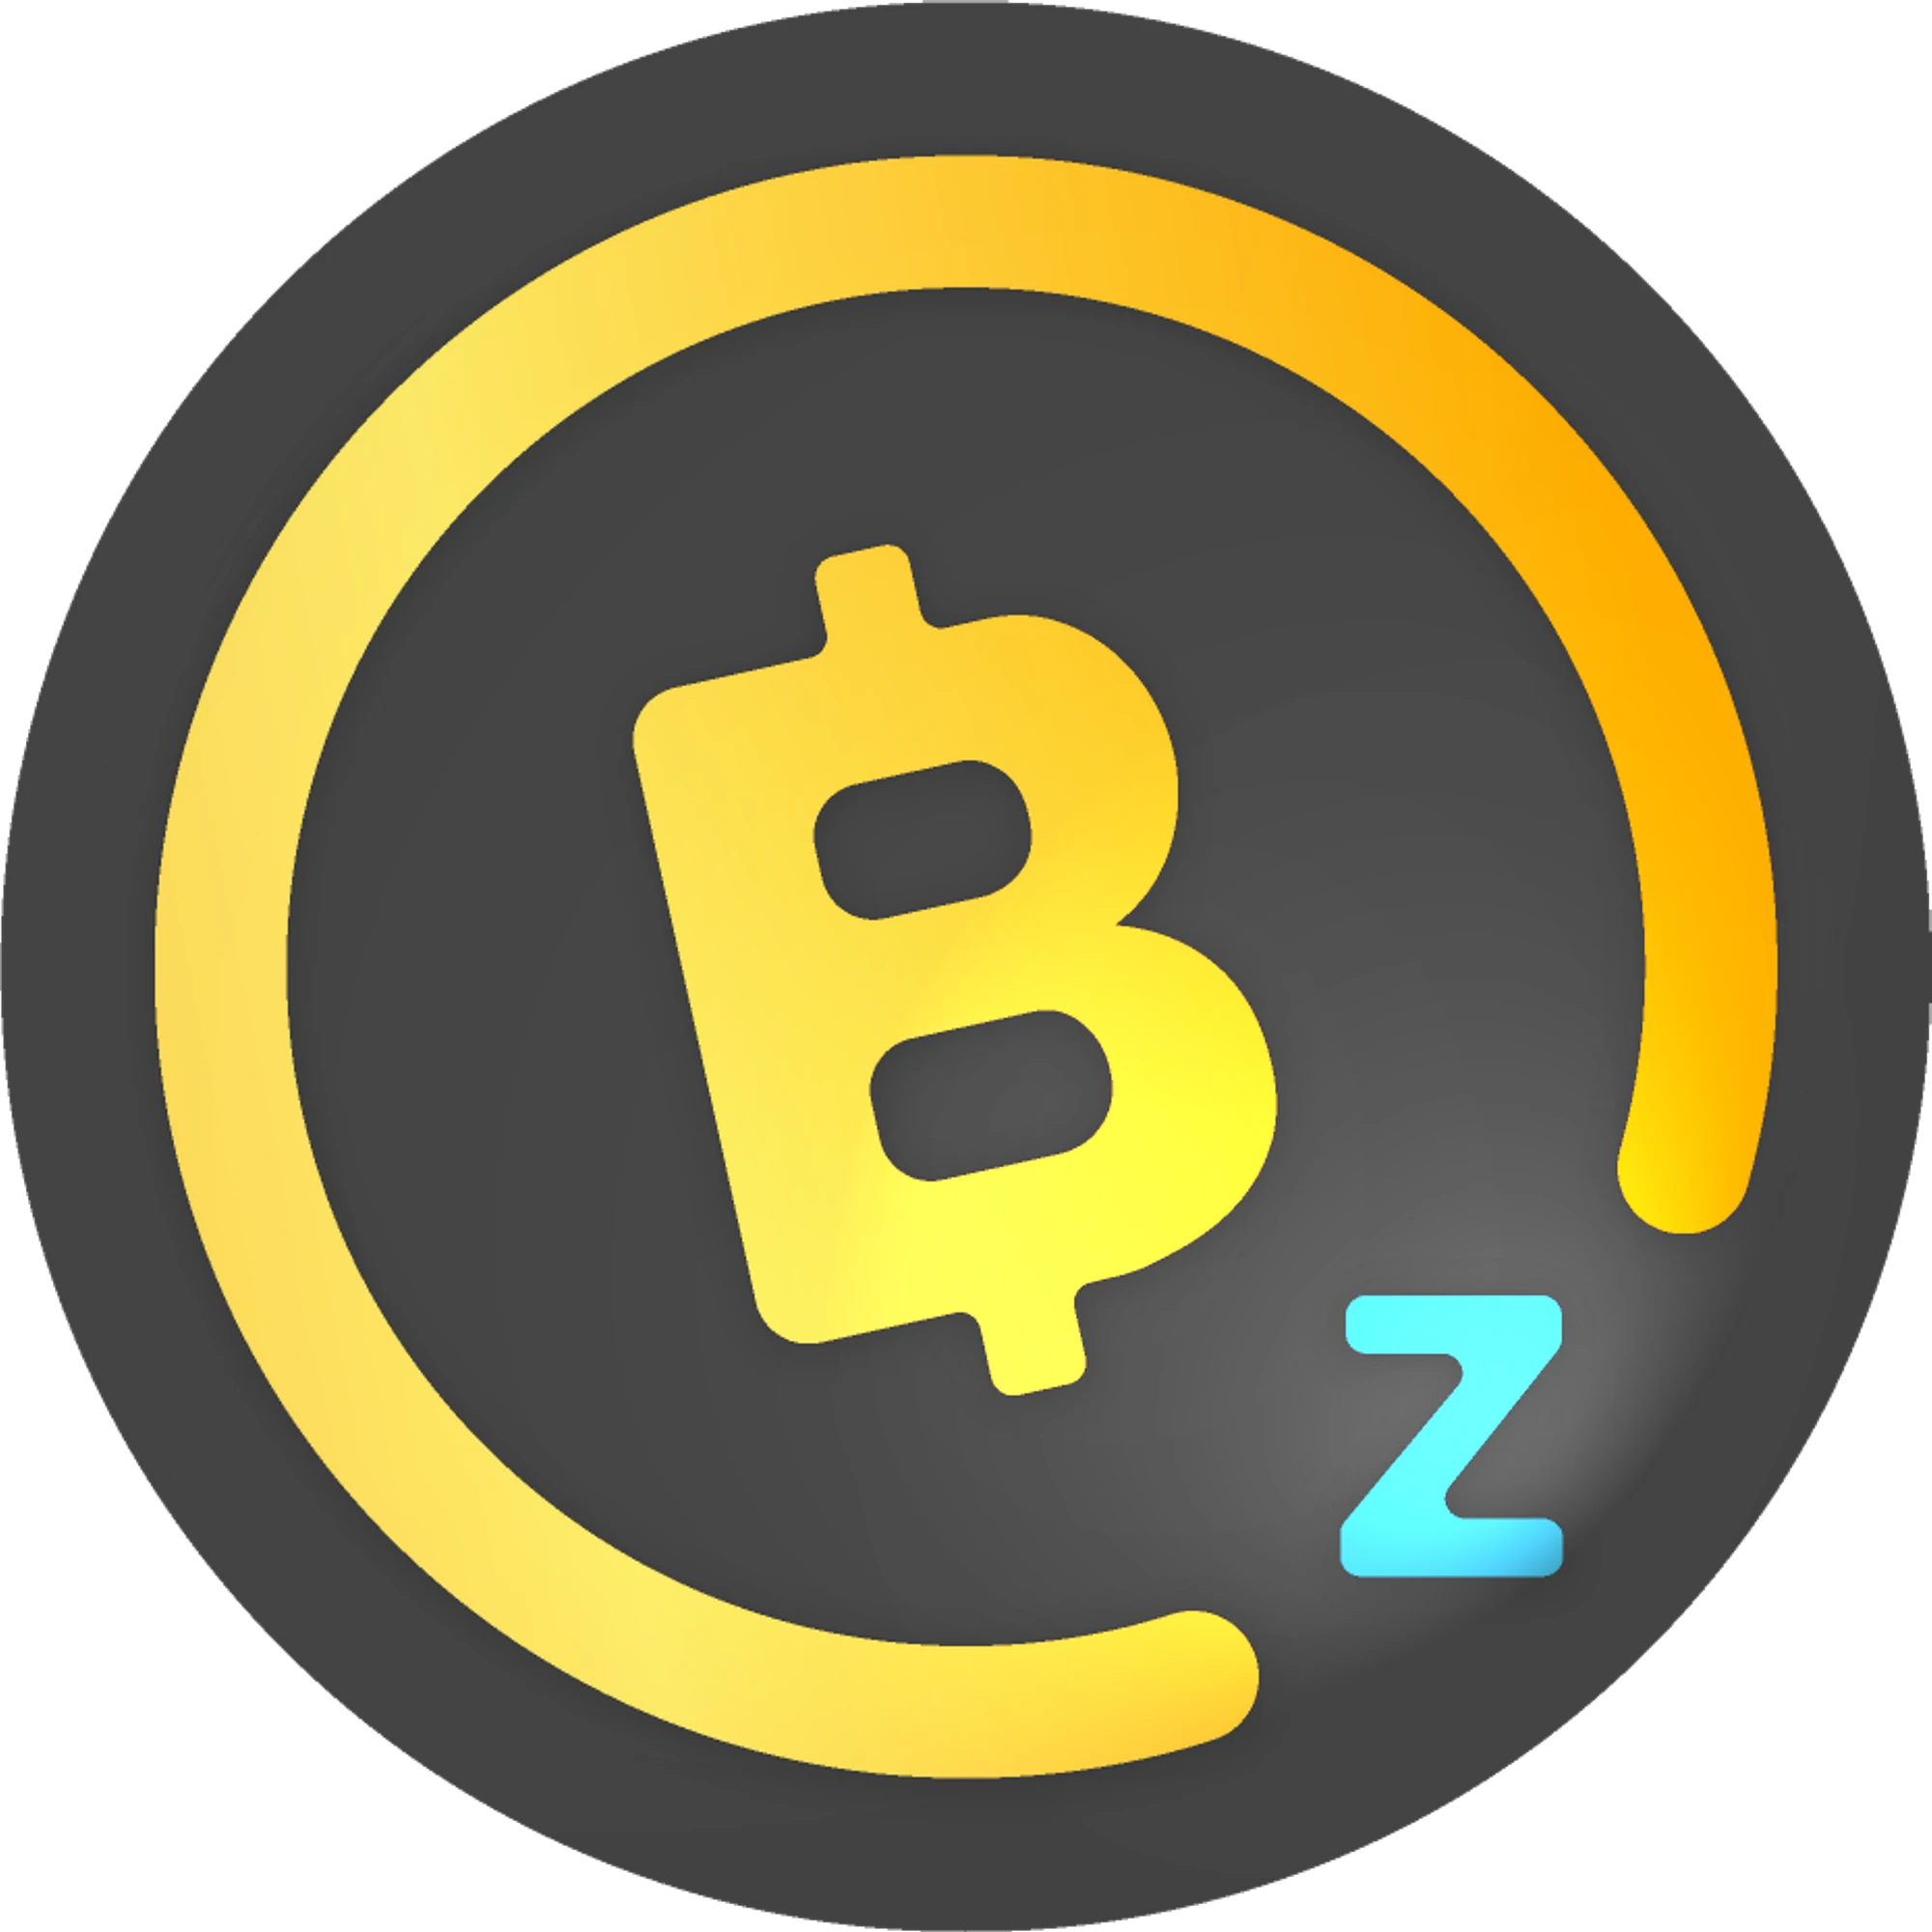 BitcoinZ logo in png format